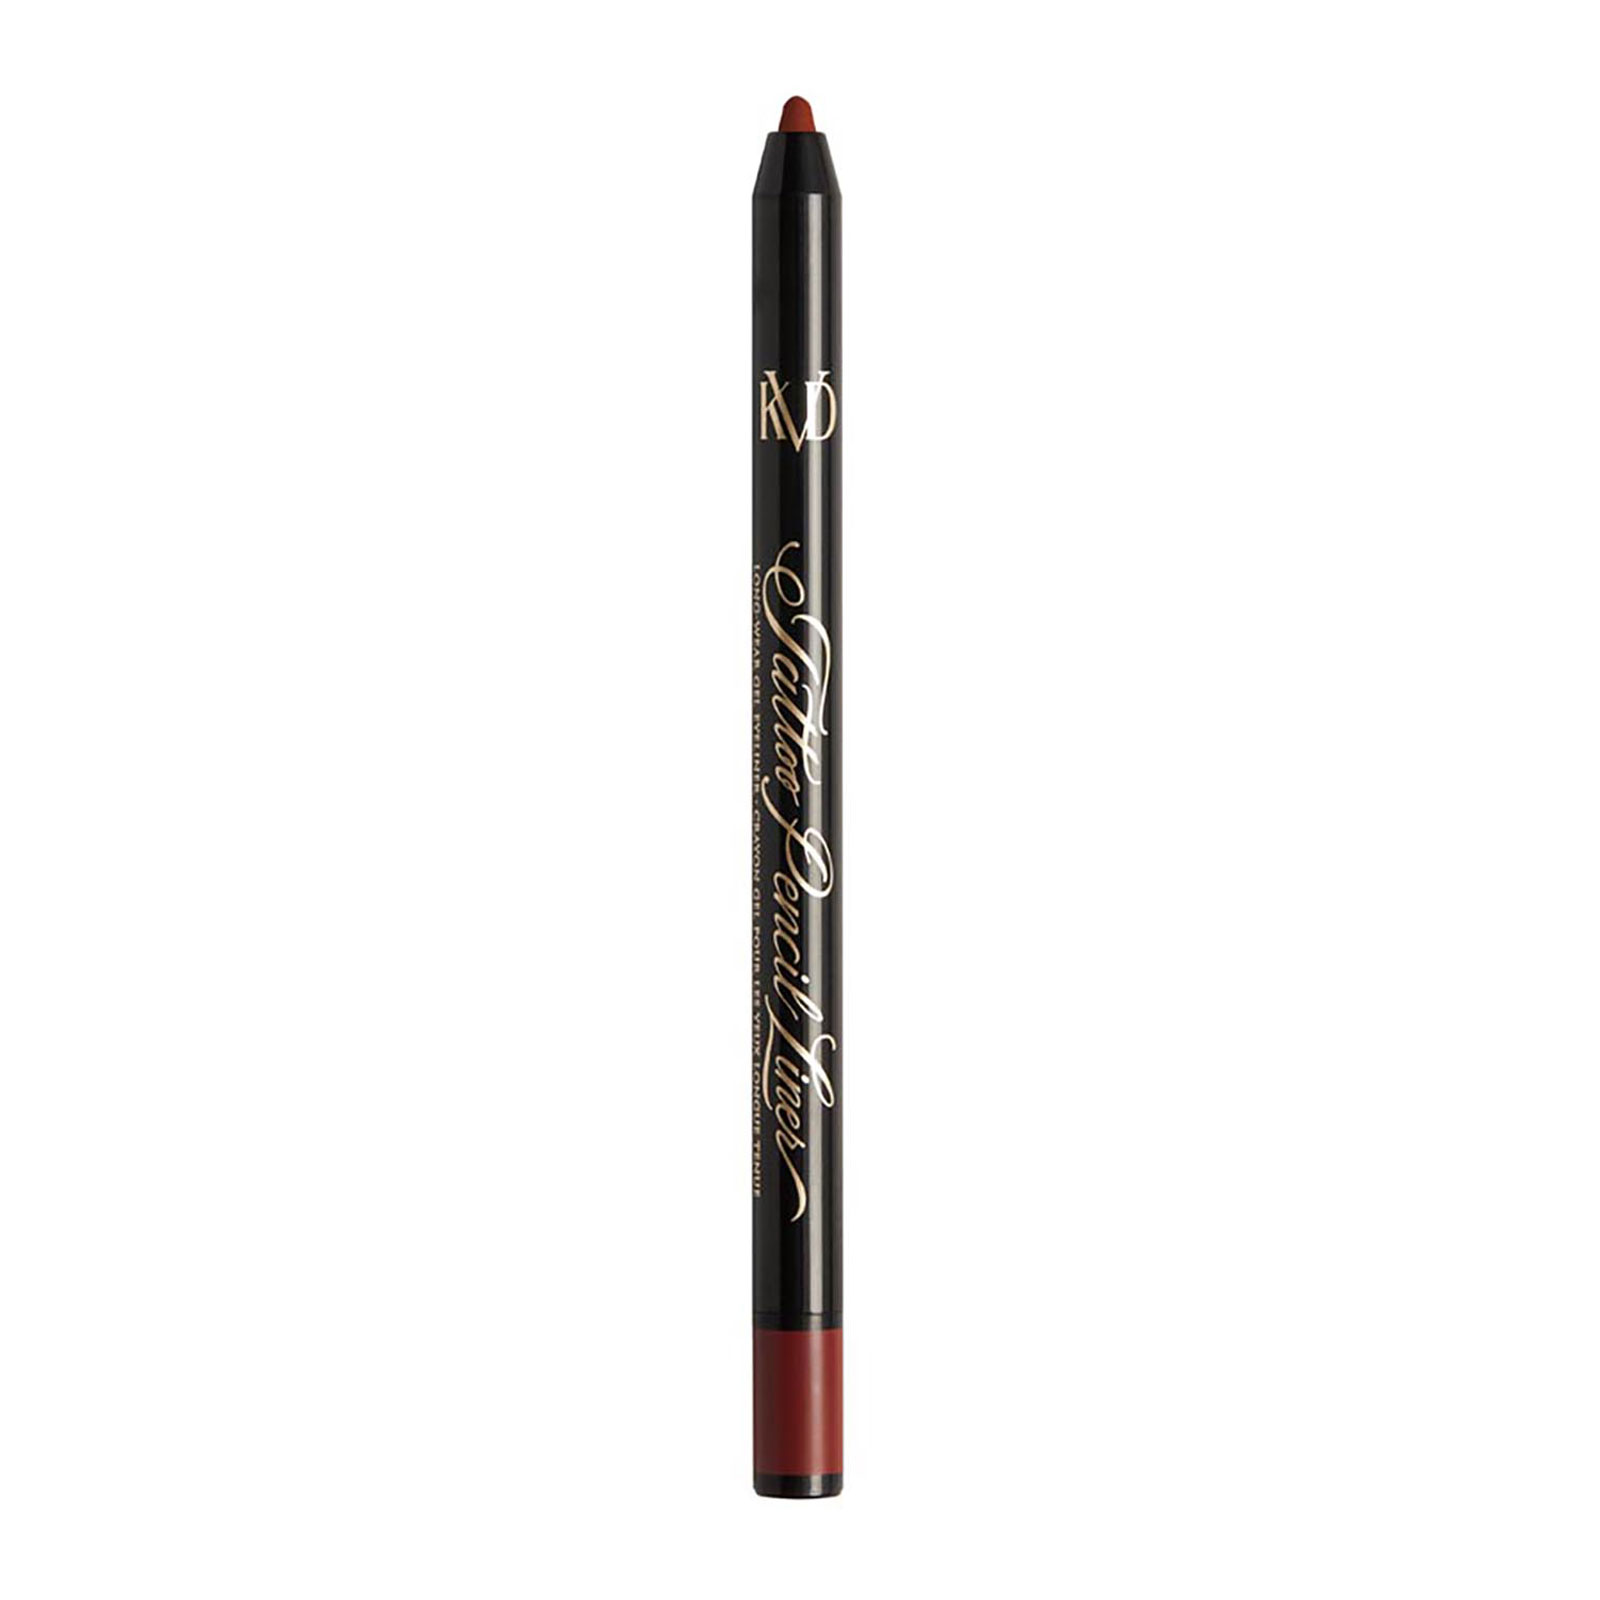 Kvd Beauty Tattoo Pencil Liner Waterproof Long-Wear Gel Eyeliner 0.5G Madder Red